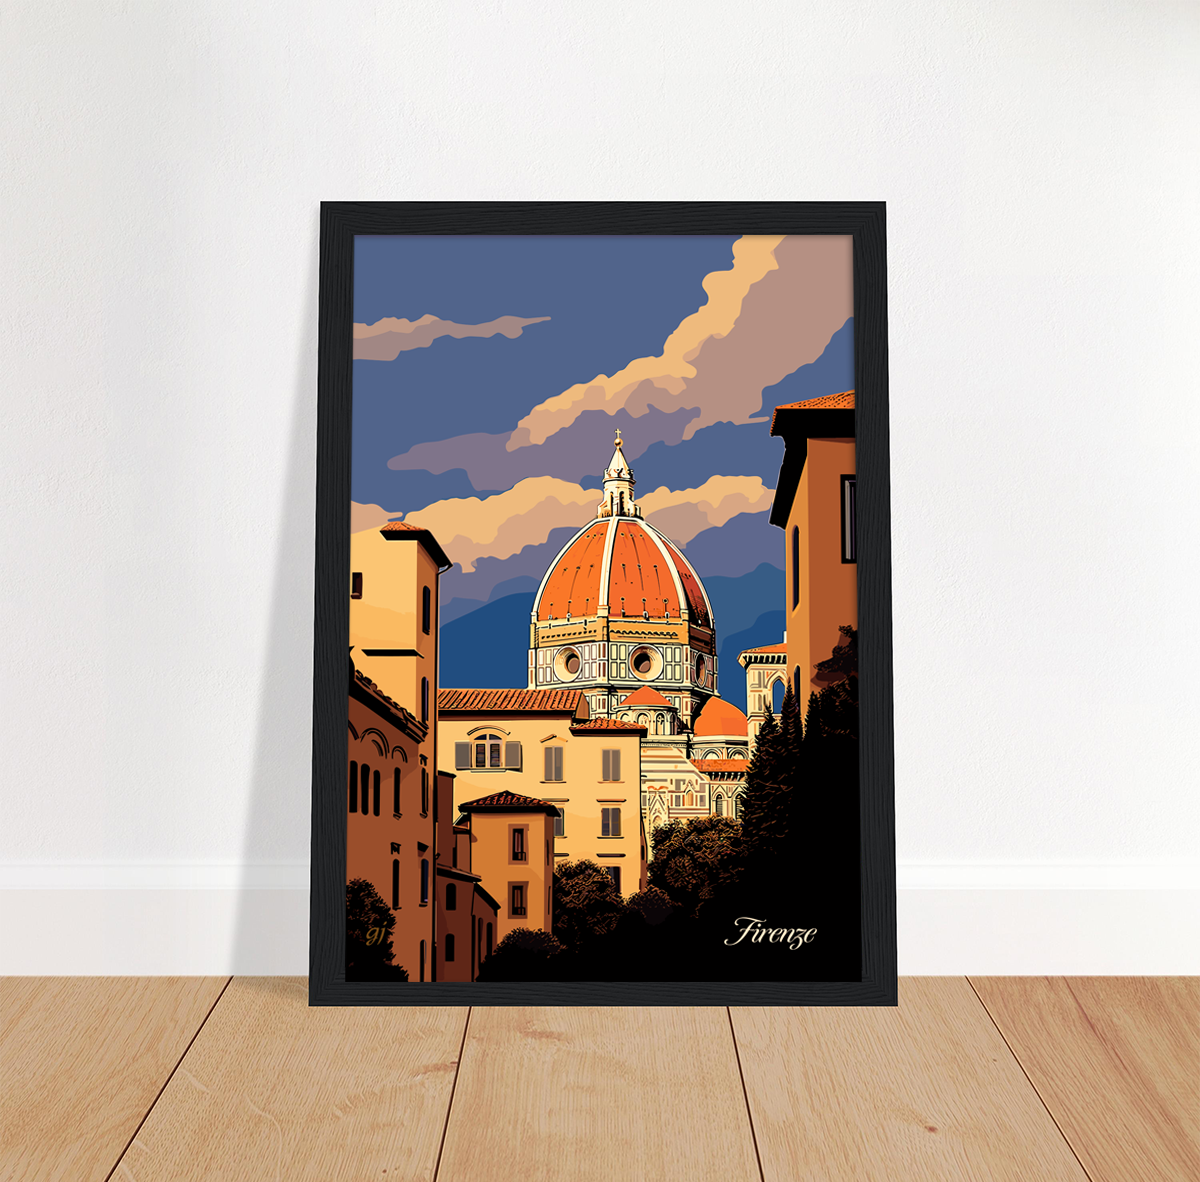 Firenze poster by bon voyage design